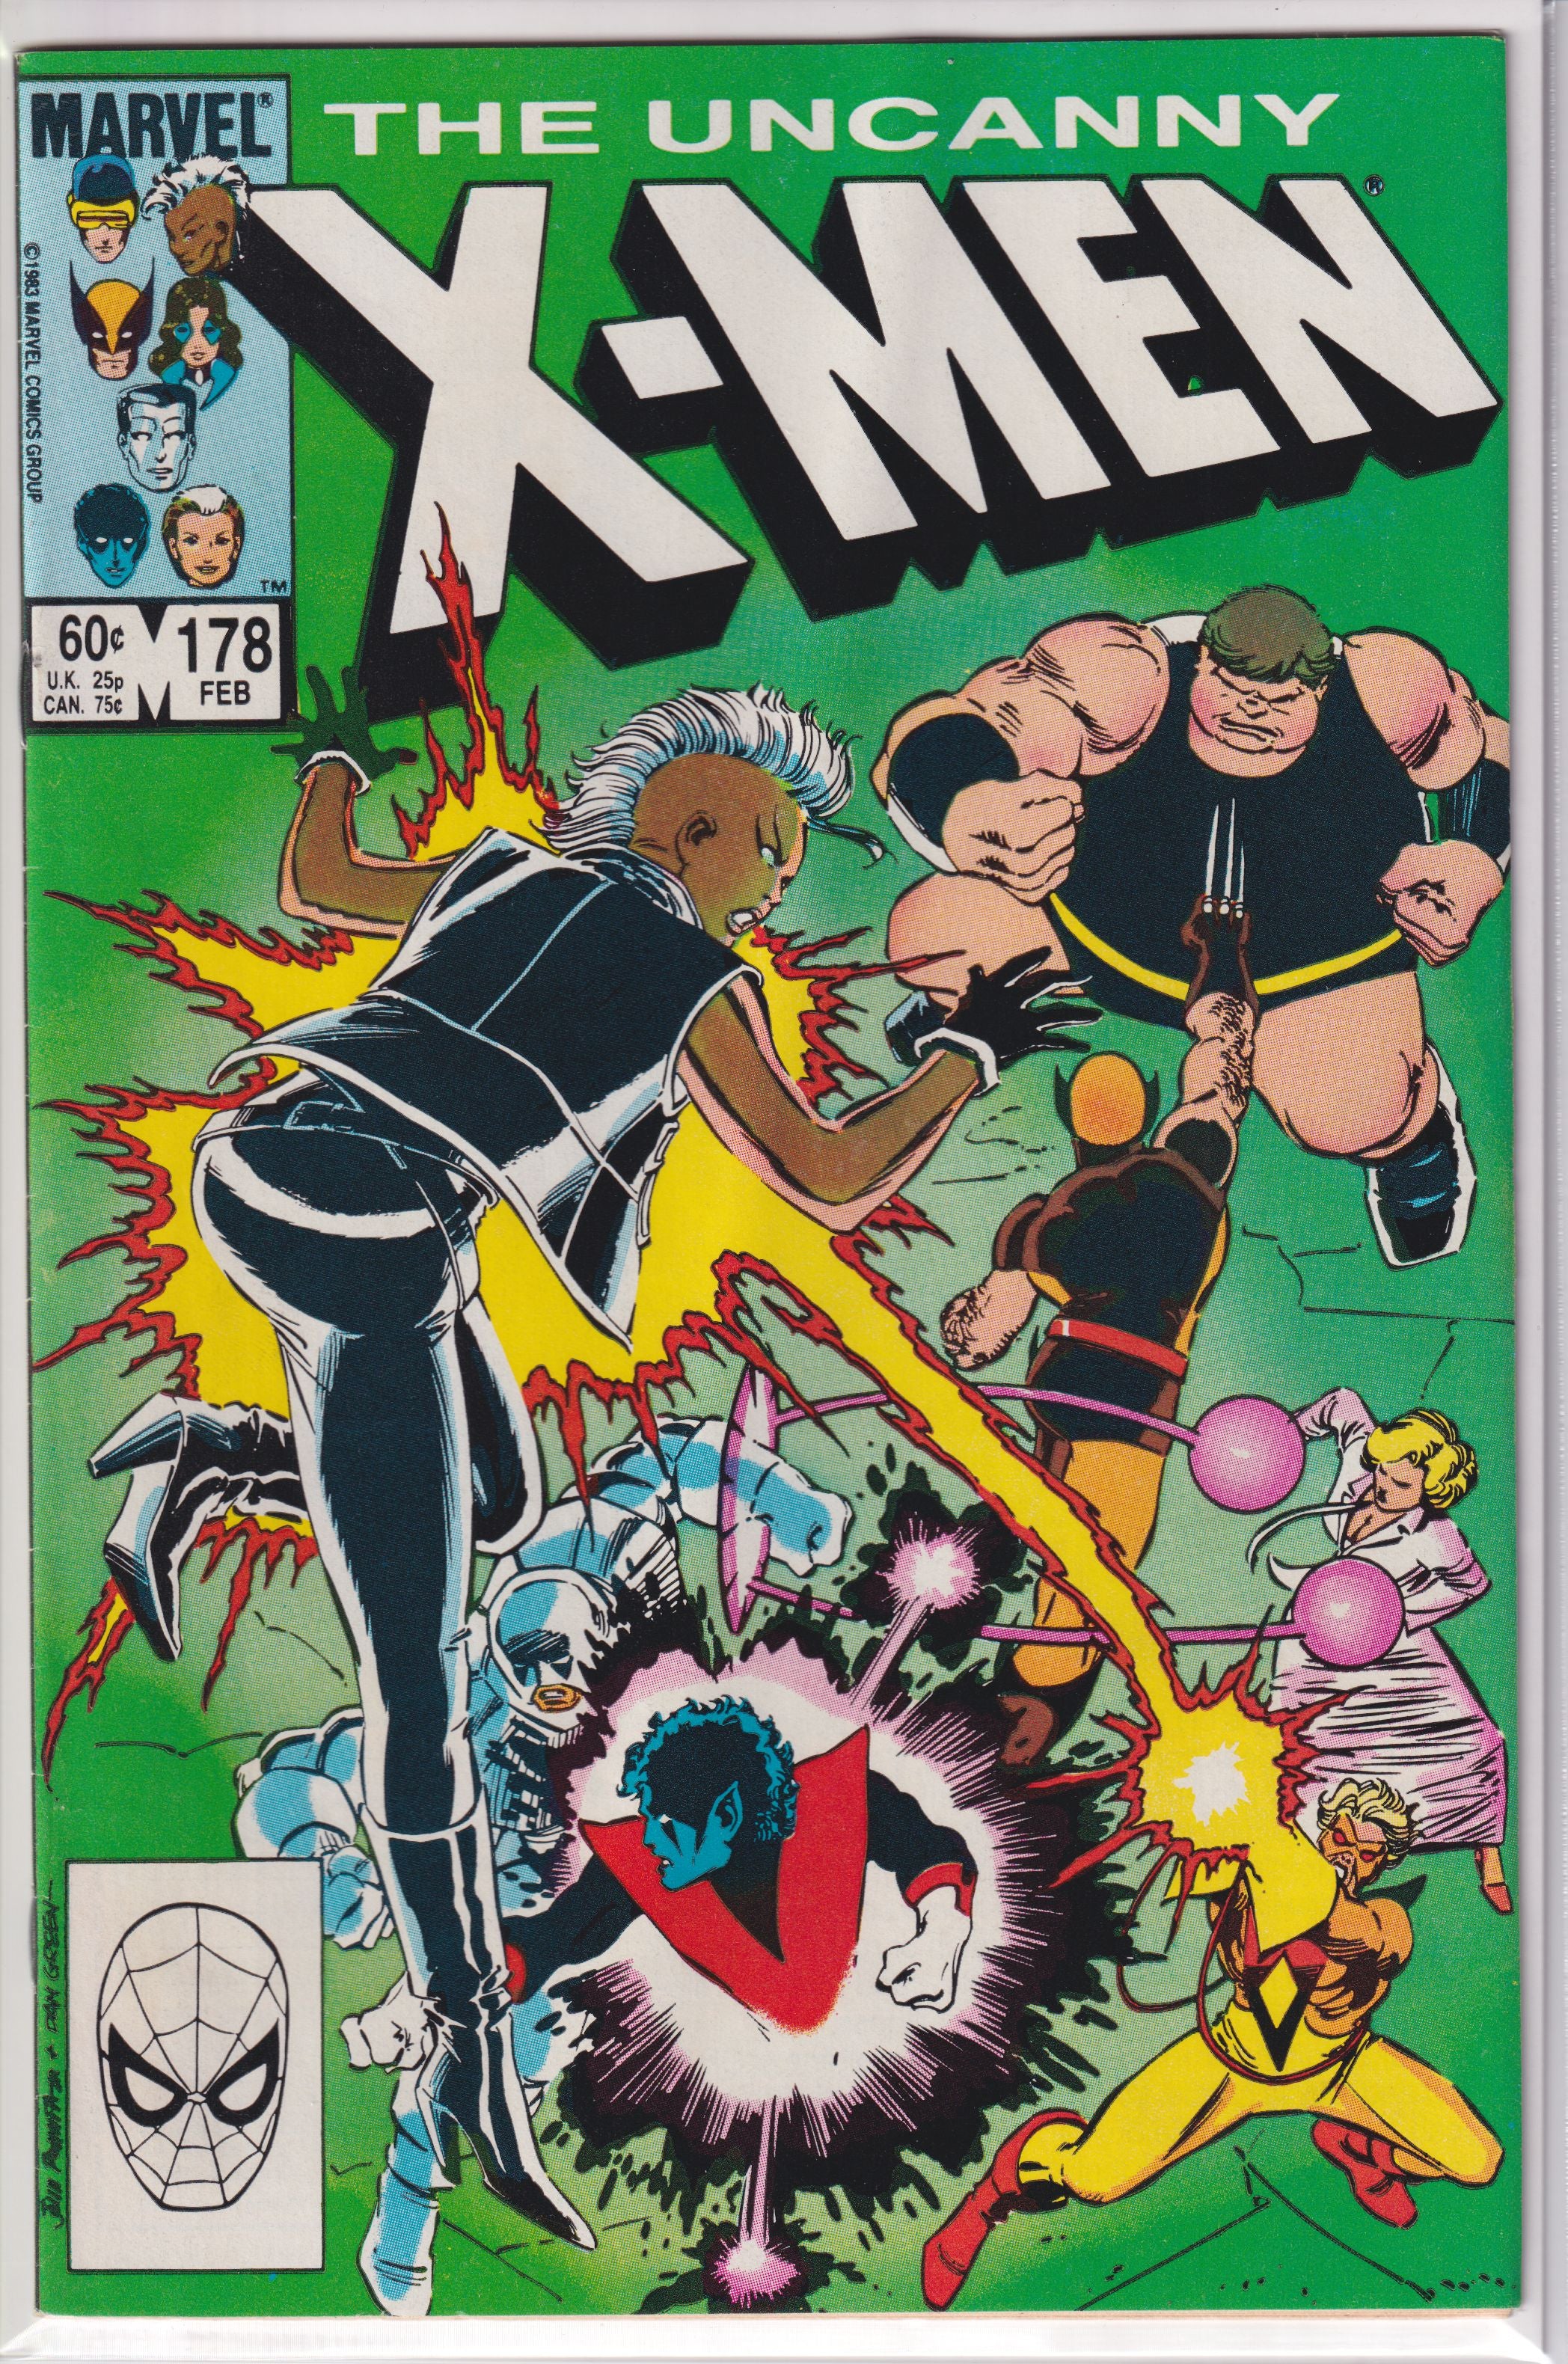 UNCANNY X-MEN (1981) #178 VG+